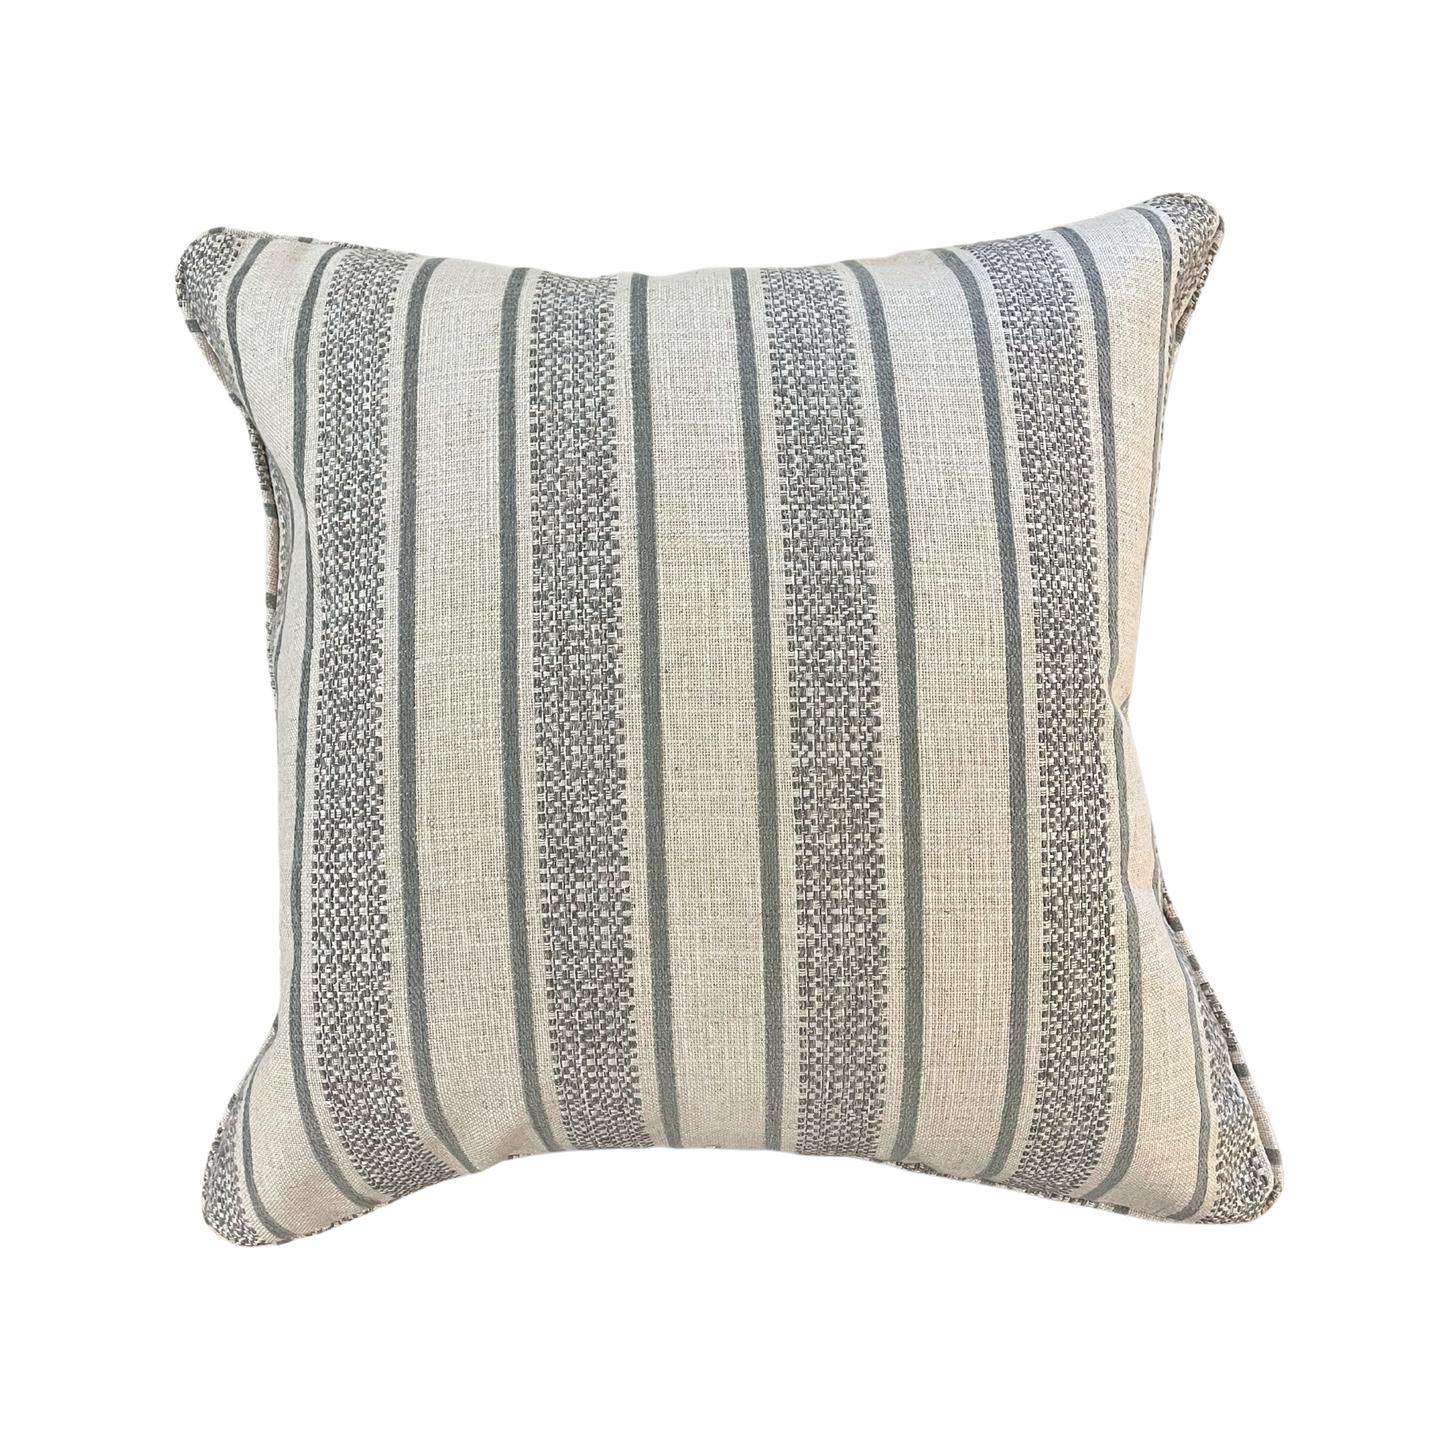 22" x 22" Pillow - Fabricut Sea and Flax Striped